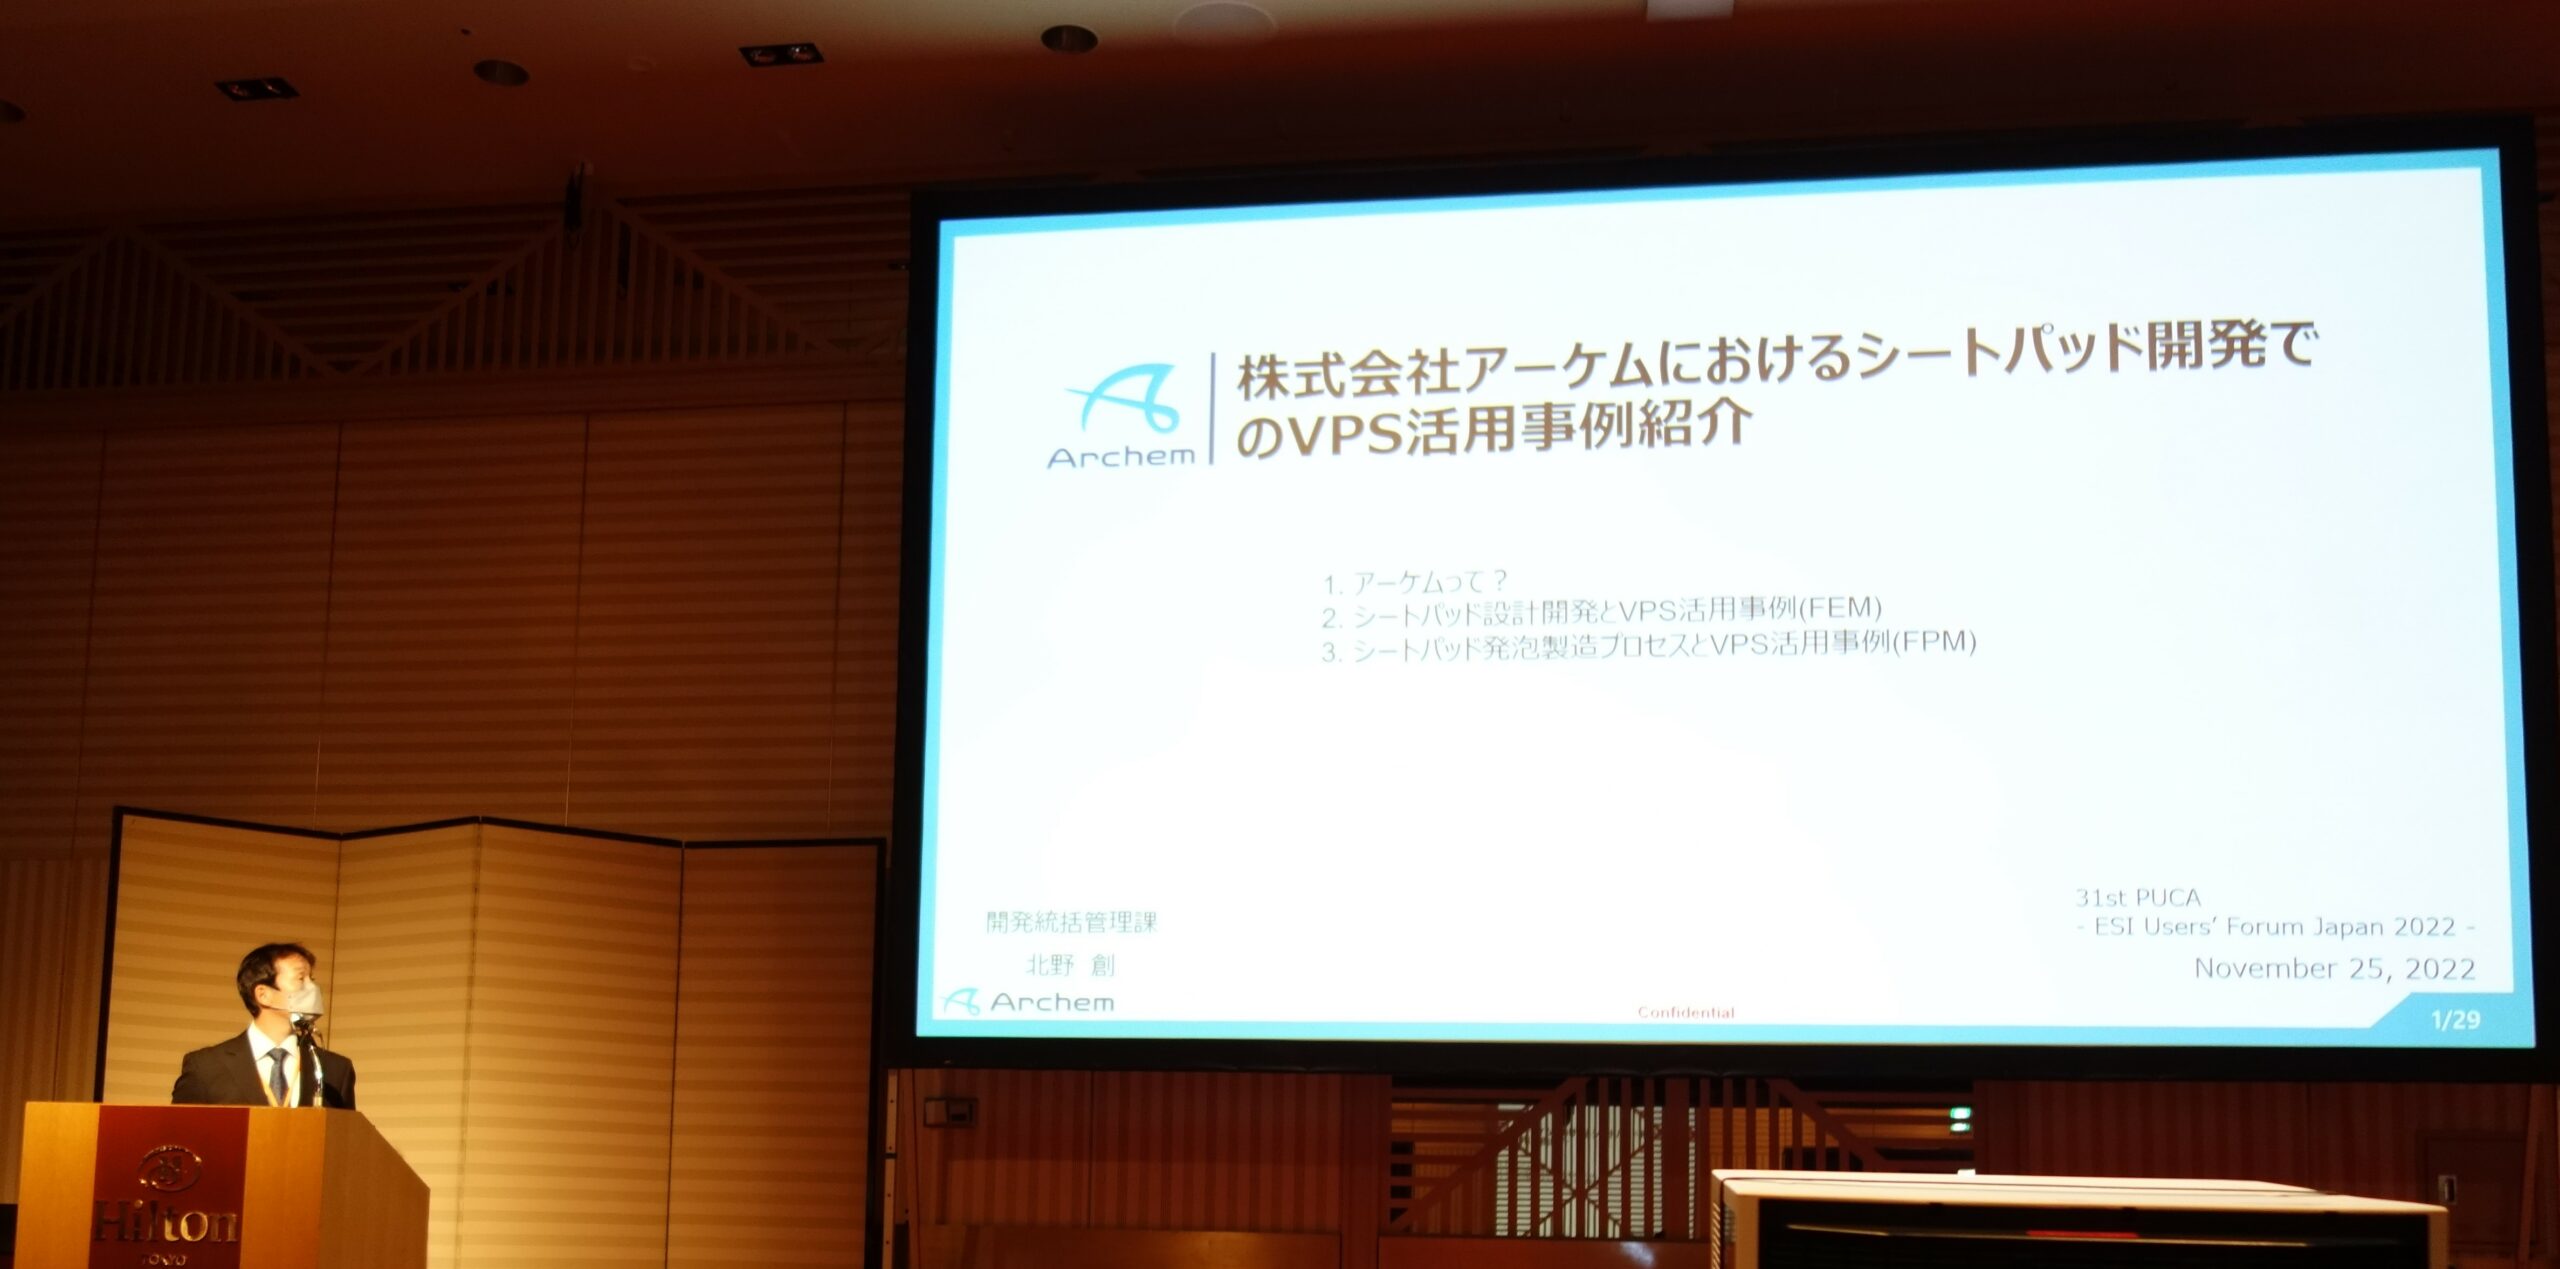 ESI User’s Forum Japan 2022にて当社のシミュレーション・予測技術を紹介